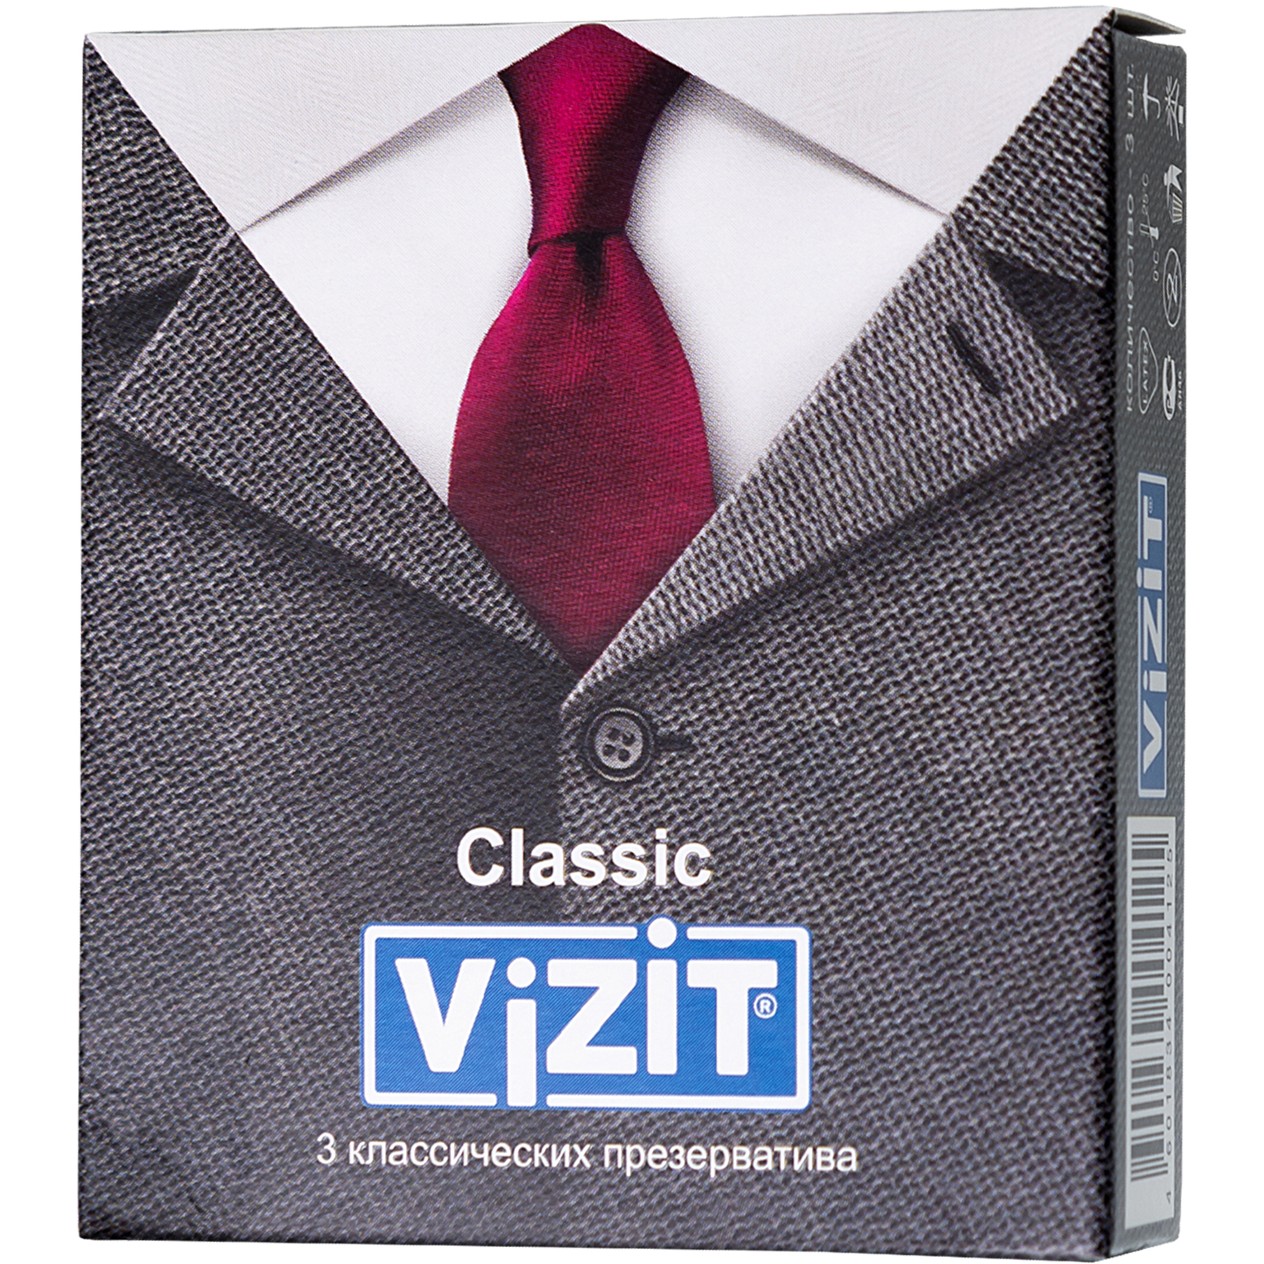 Classic 3.3. Презервативы Vizit Classic классические,. Презерватив Vizit №3 Classic. Vizit Classic 12 шт. Vizit Classic классические 3.